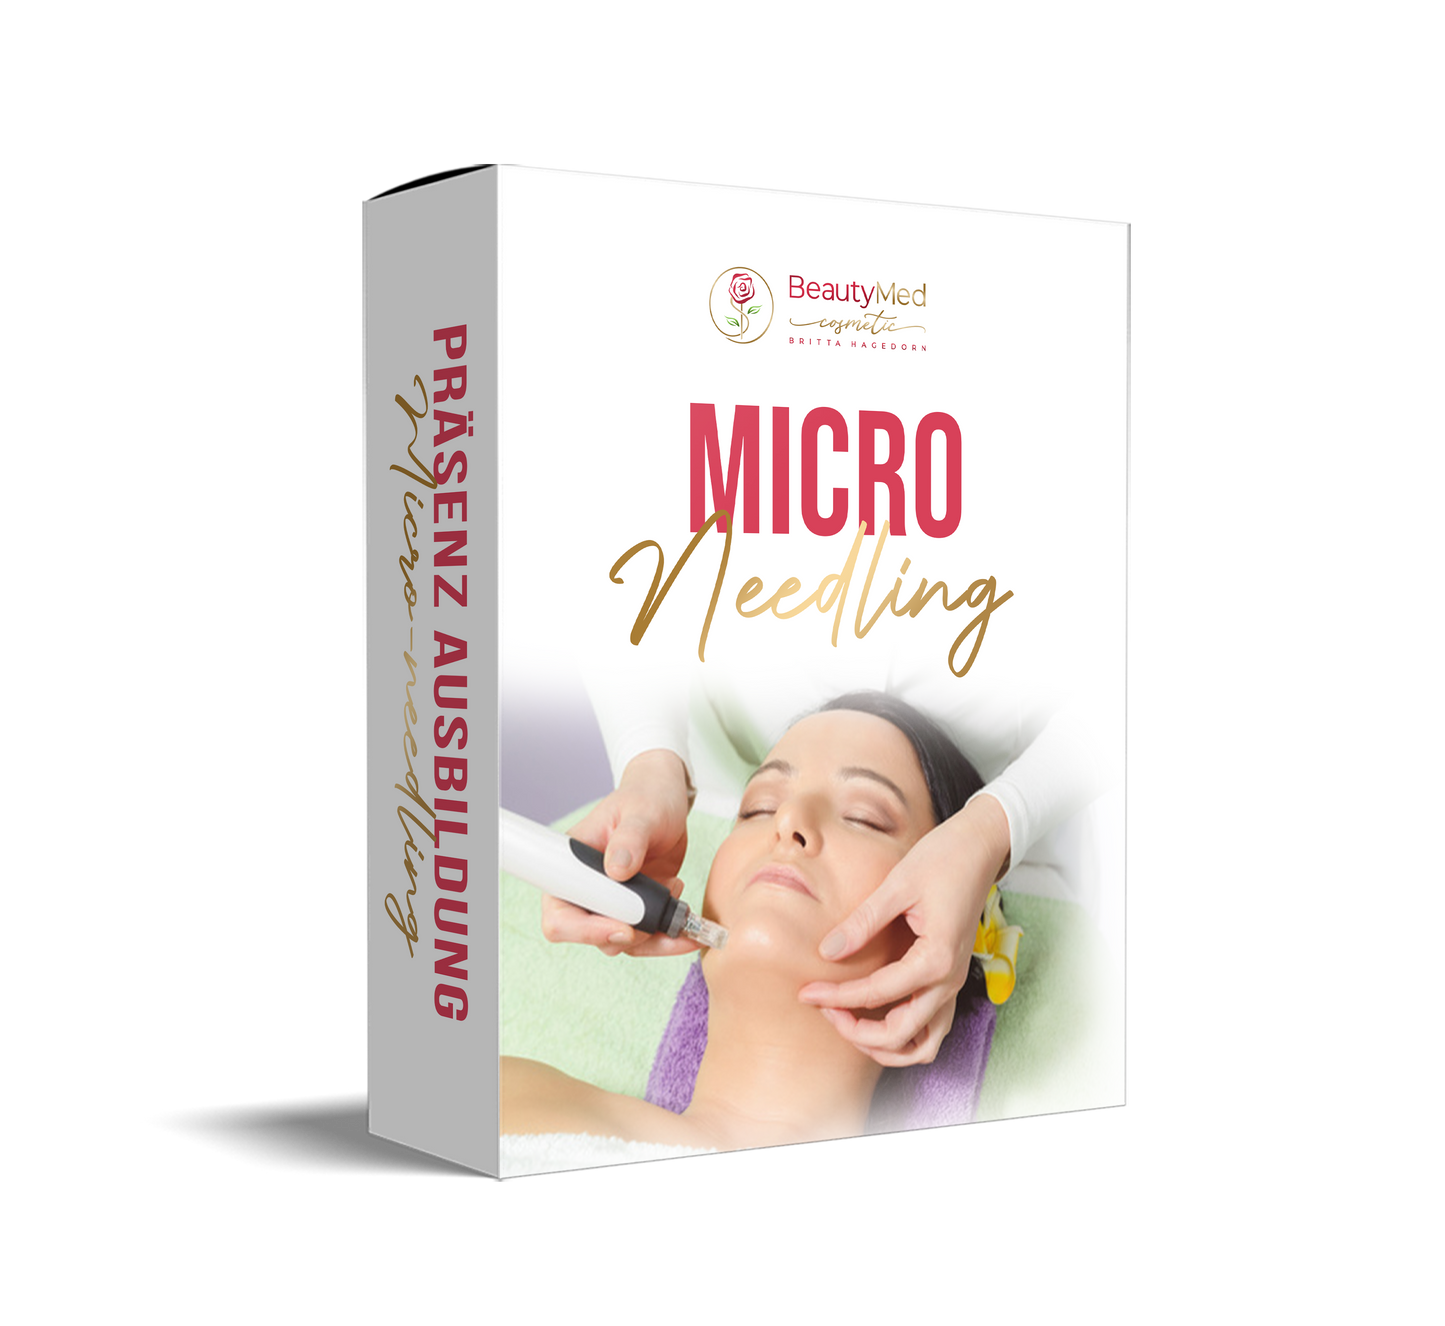 Präsenz-Ausbildung "Micro-Needling"